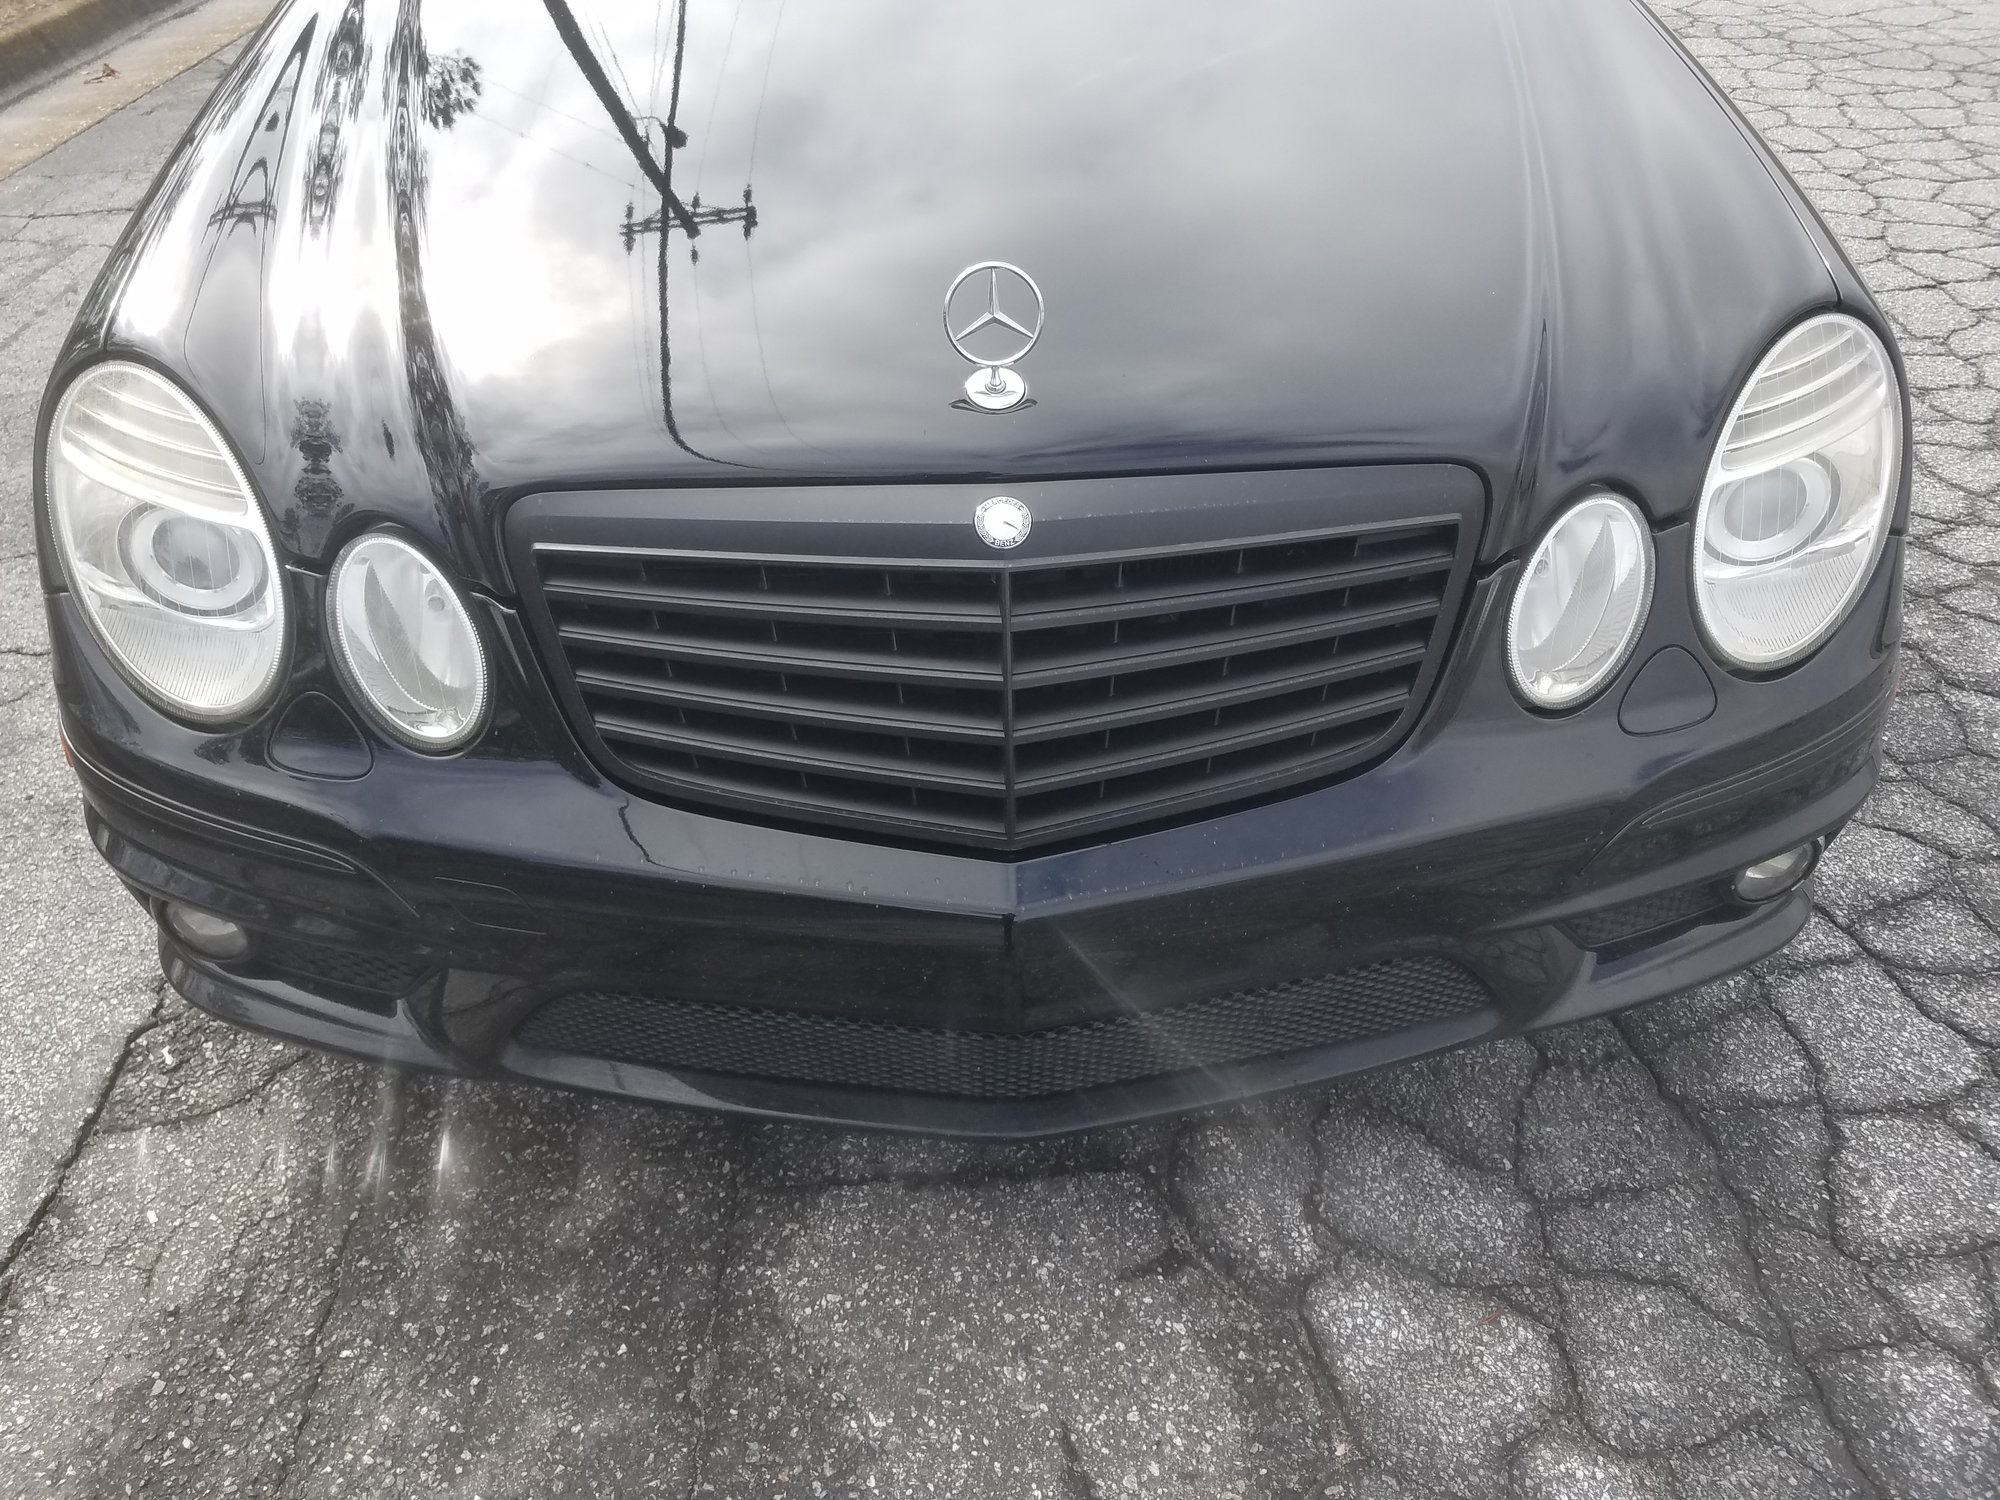 2009 Mercedes-Benz E63 AMG - W211 E63 Black on Black - Used - VIN WDBUF77X39B385422 - 8 cyl - 2WD - Automatic - Sedan - Black - Gainesville, GA 30506, United States